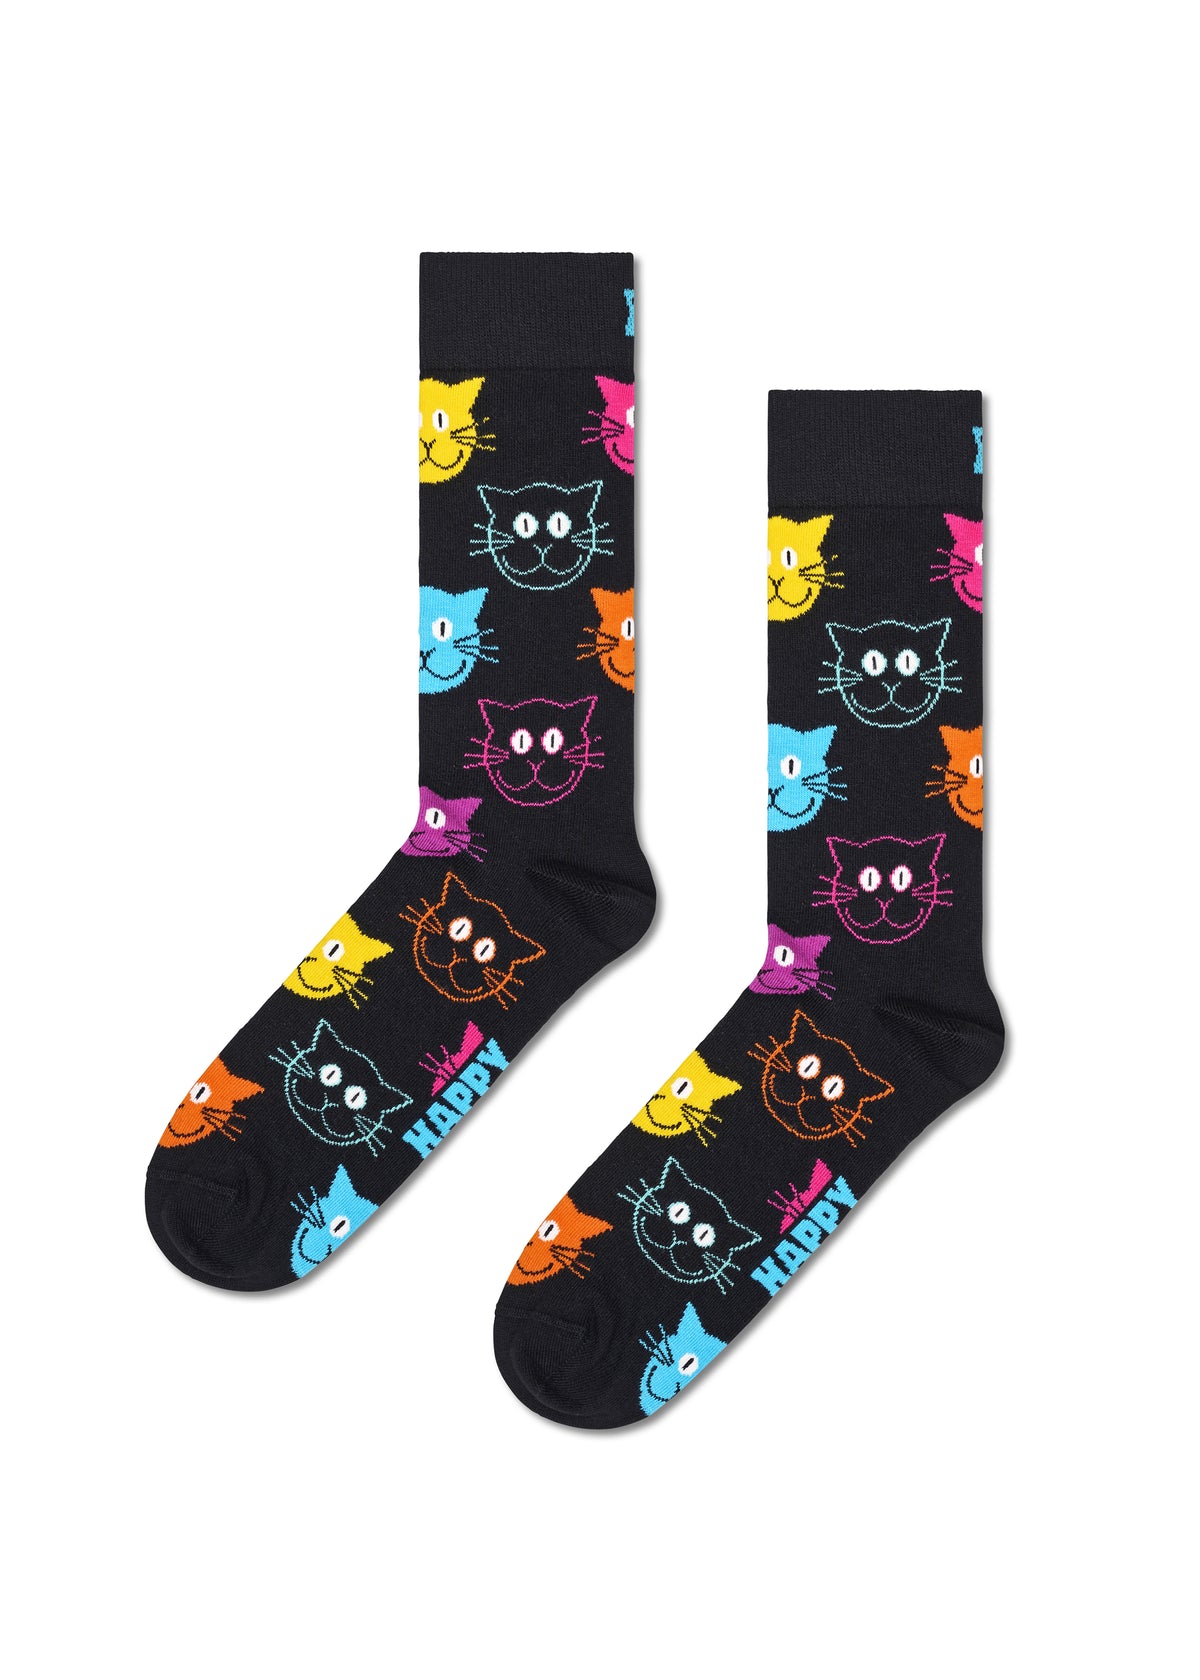 Adult socks - Cat